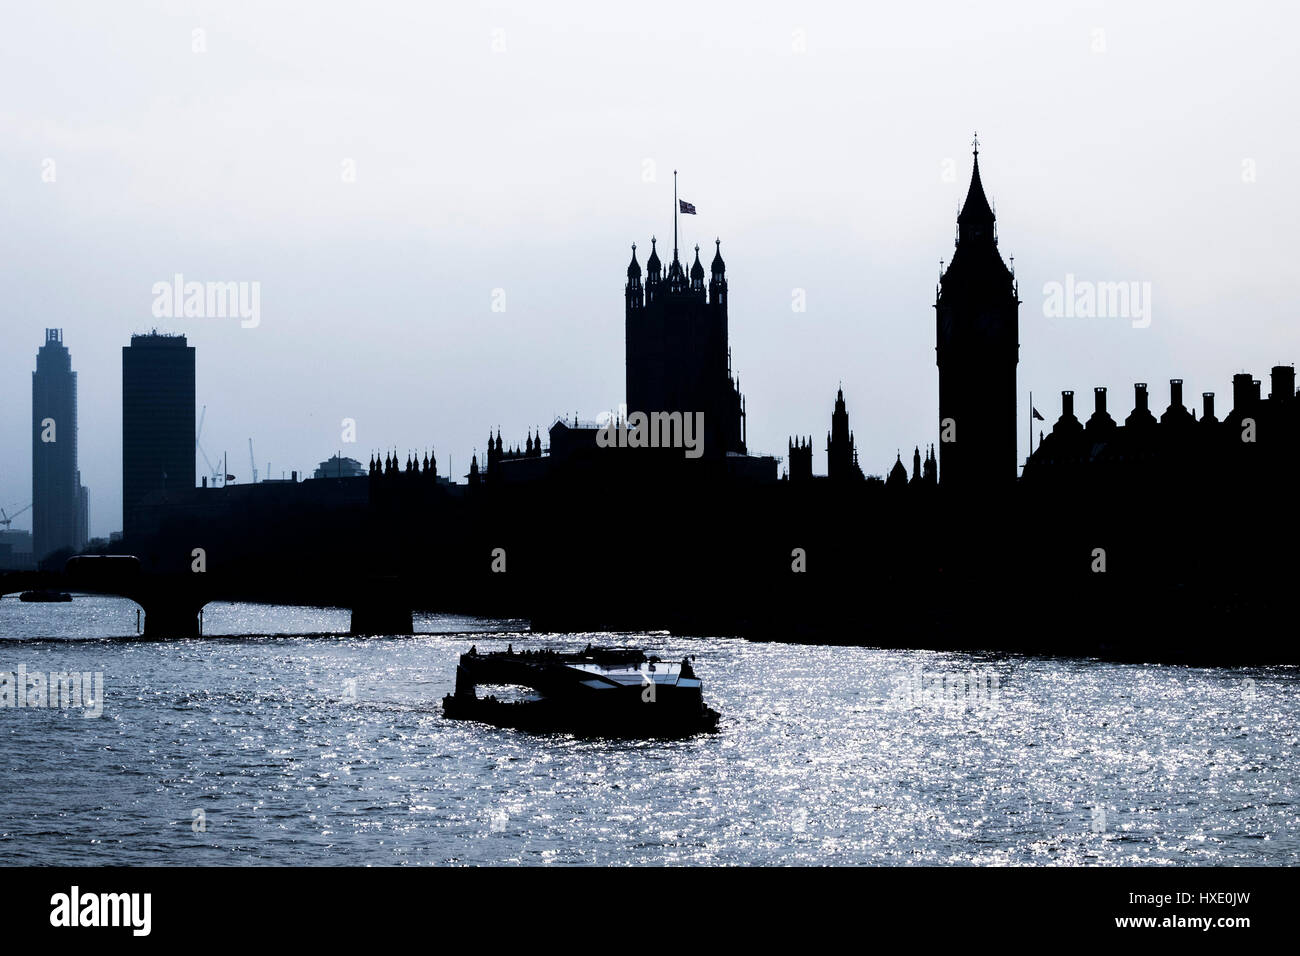 El Parlamento de Westminster silueta skyline londinense Big Ben Río Támesis neblina turbia Foto de stock